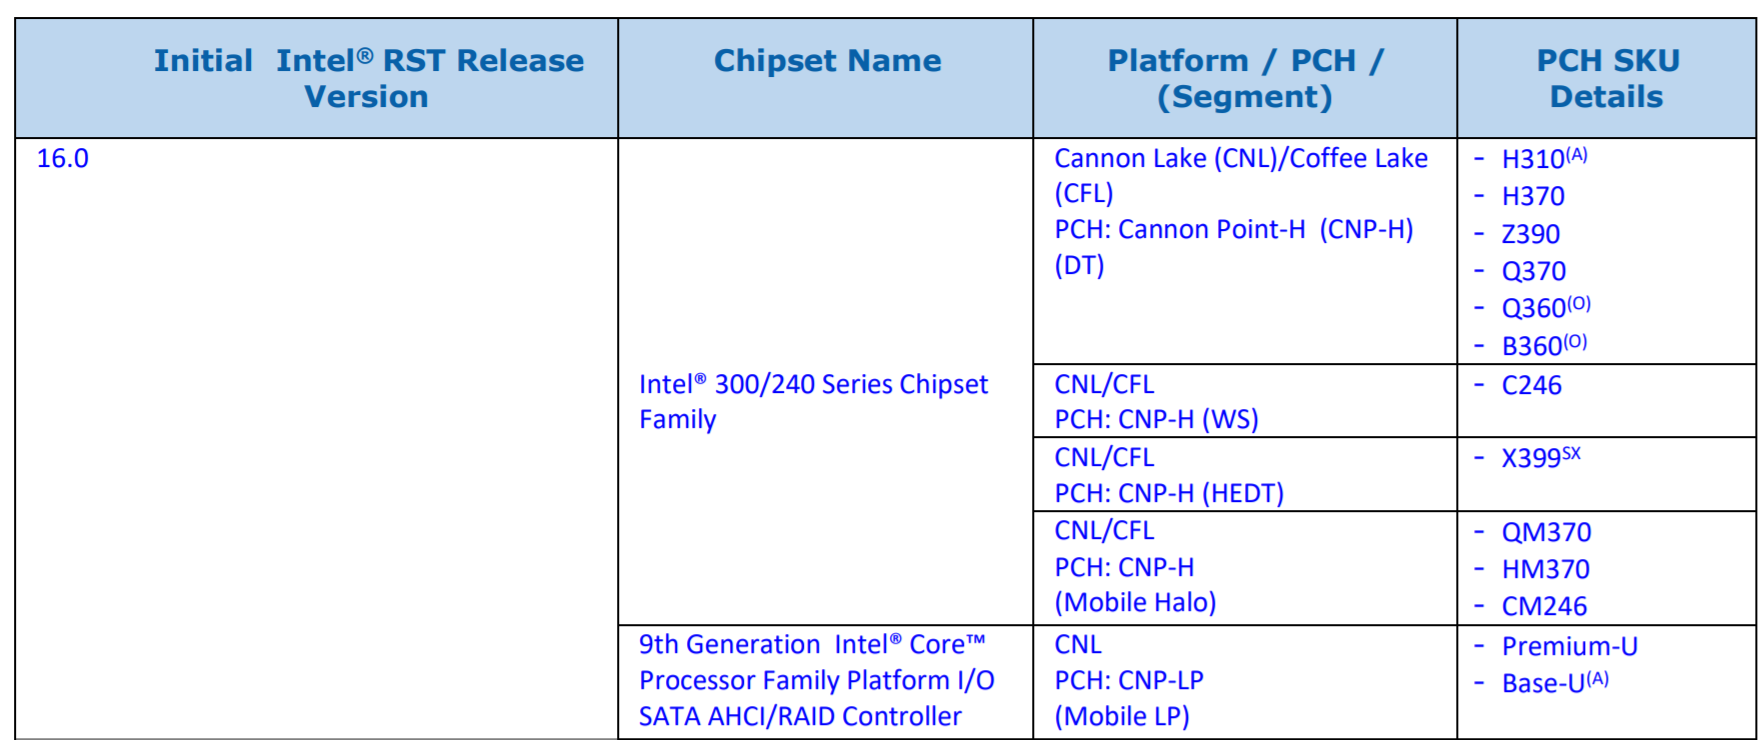 Media asset in full size related to 3dfxzone.it news item entitled as follows: Intel conferma il prossimo lancio dei chipset Z390 e X399 per sistemi desktop | Image Name: news28176_Intel_Z390-X399_1.png